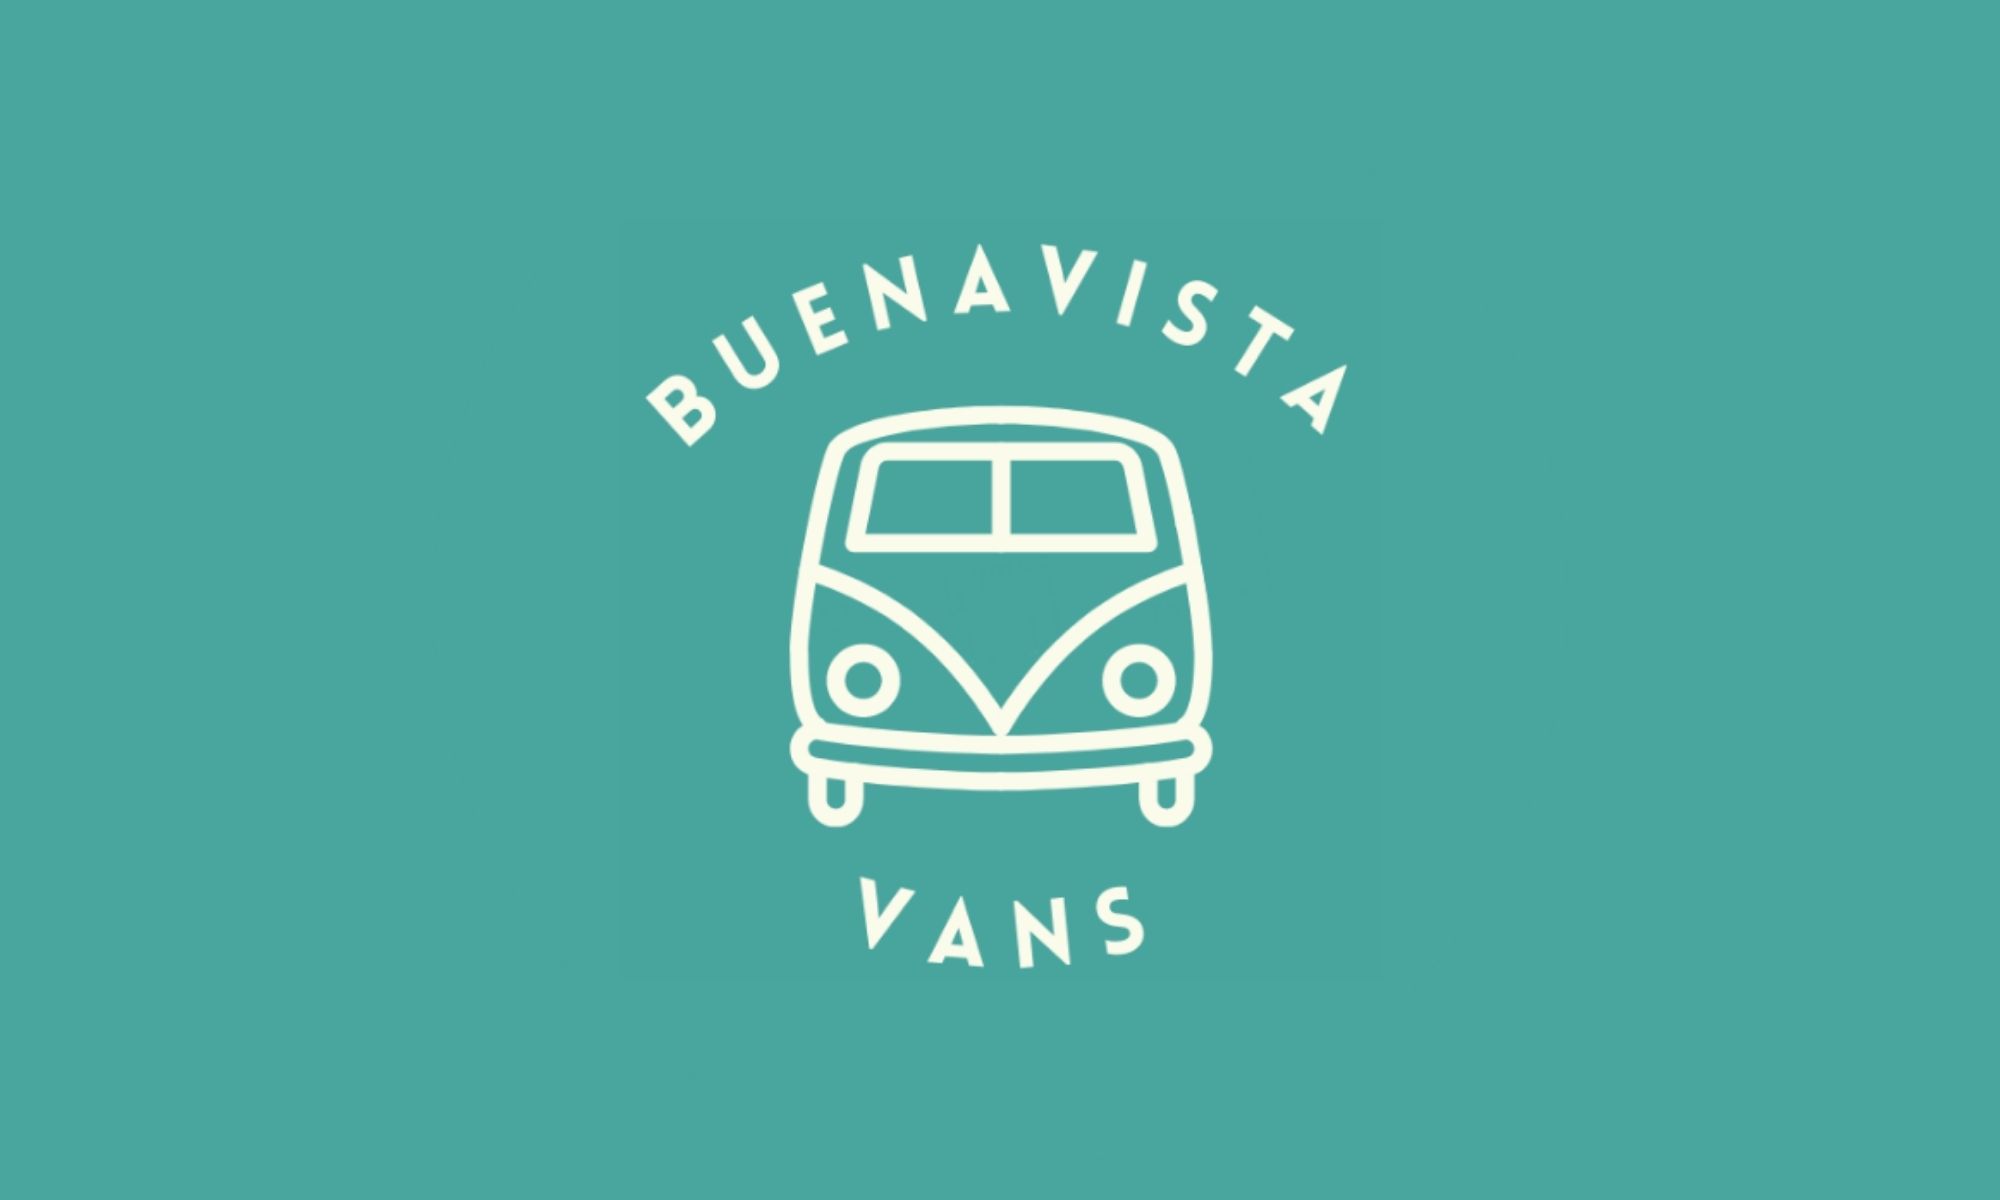 VW Bus mieten auf Teneriffa mir Buenavista Vans